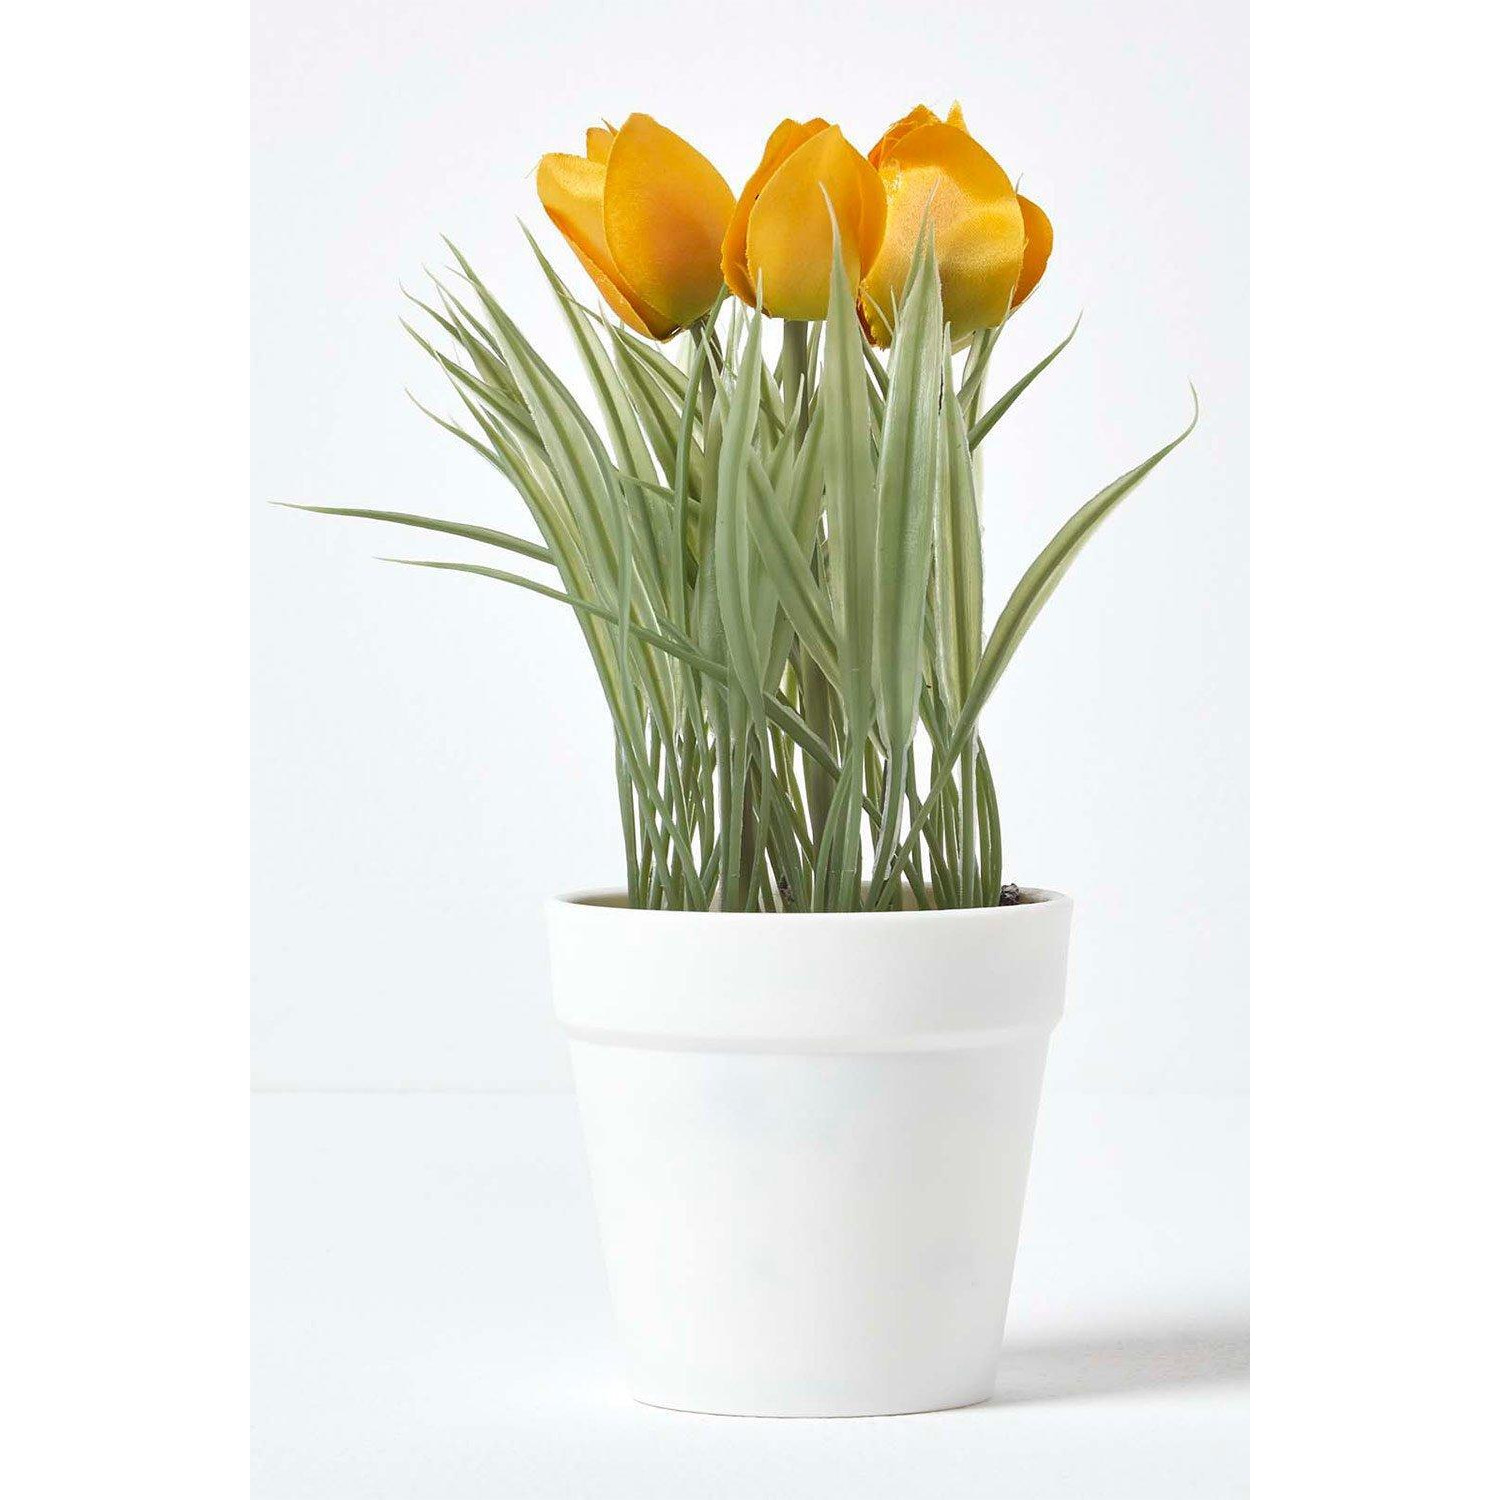 Artificial Tulips in White Decorative Pot, 22 cm Tall - image 1